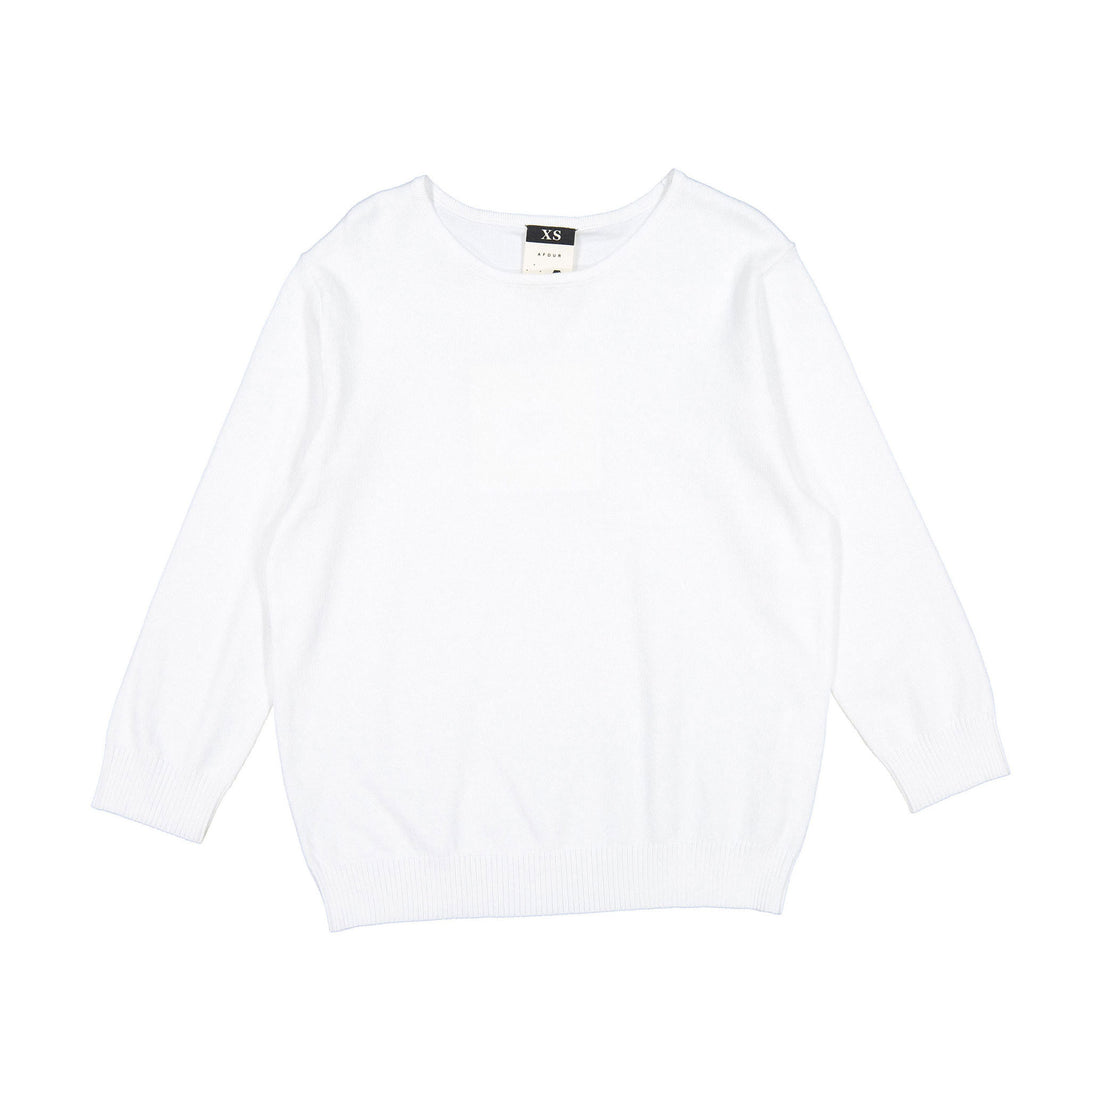 A4 White Crewneck Sweater